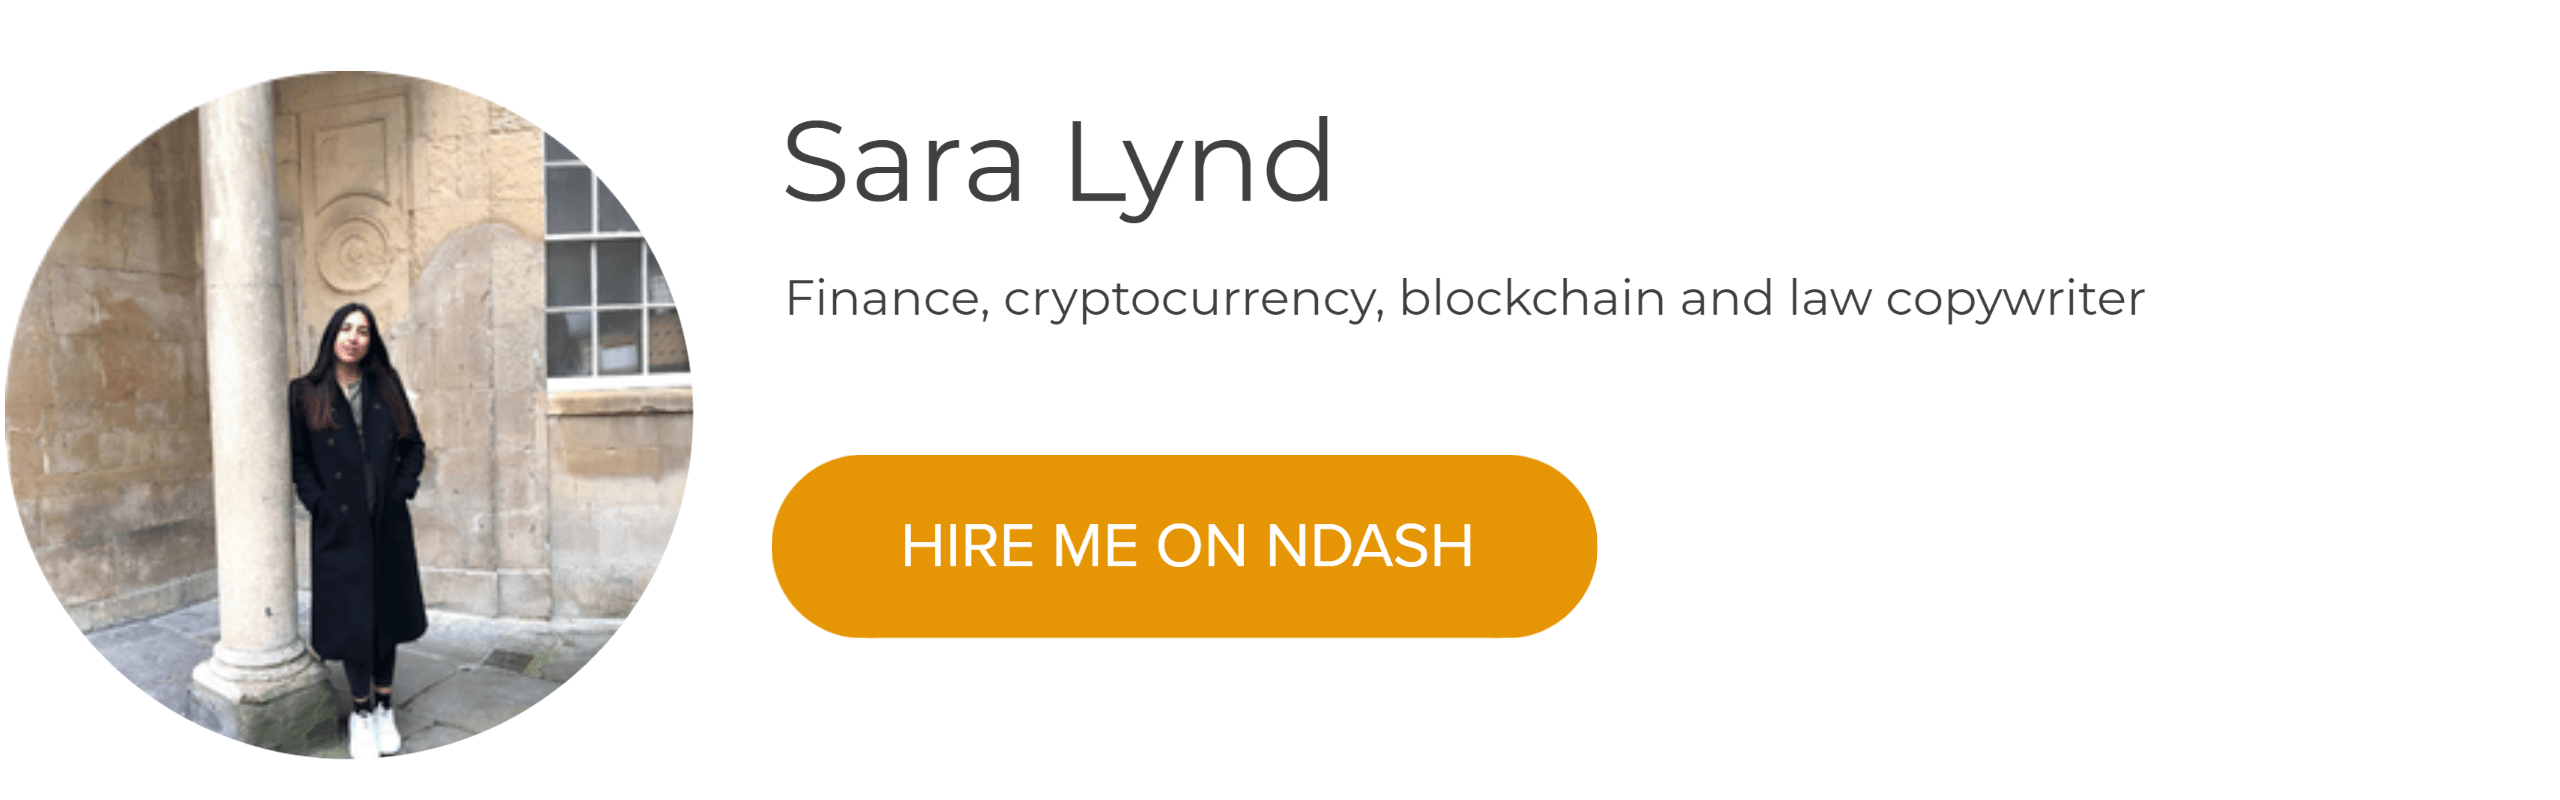 Sara Lynd: Finance, Cryptocurrency, Blockchain & Law Copywriter